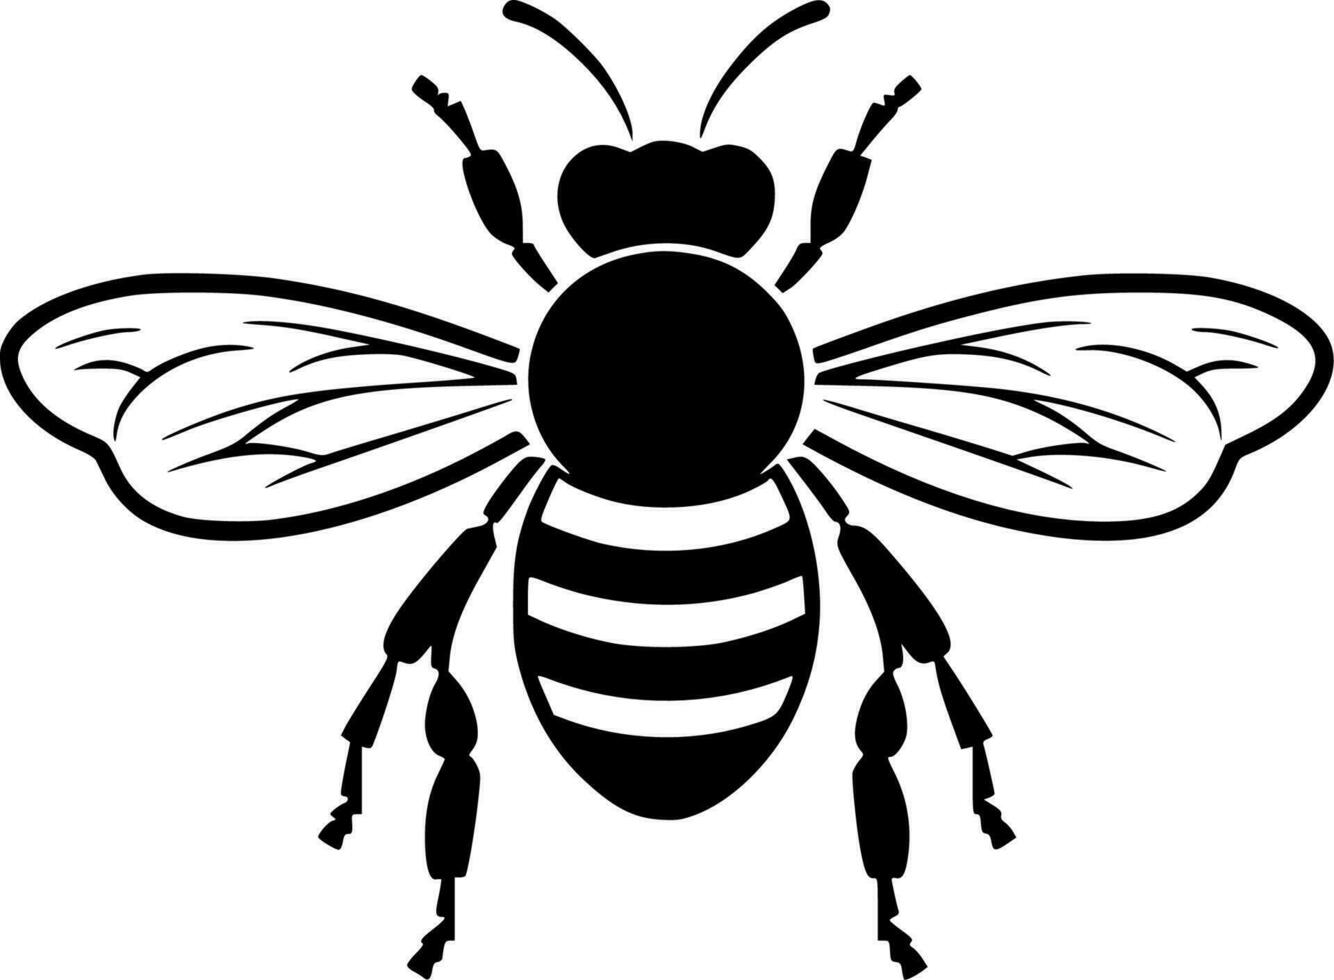 abelha - minimalista e plano logotipo - vetor ilustração